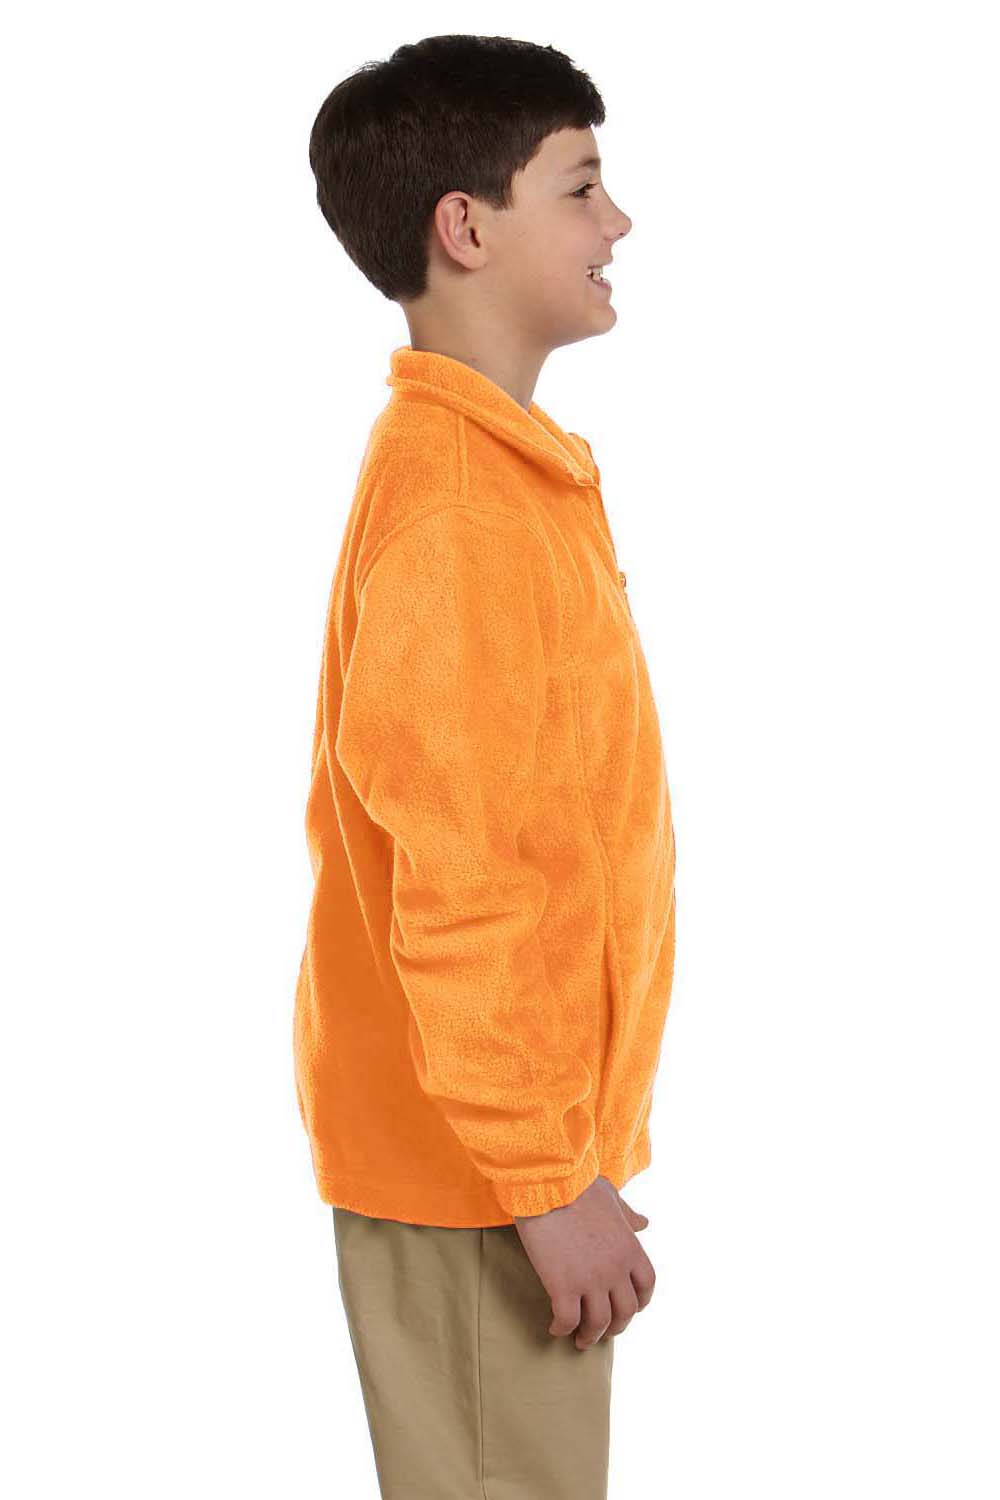 Harriton M990Y Youth Full Zip Fleece Jacket Safety Orange Side